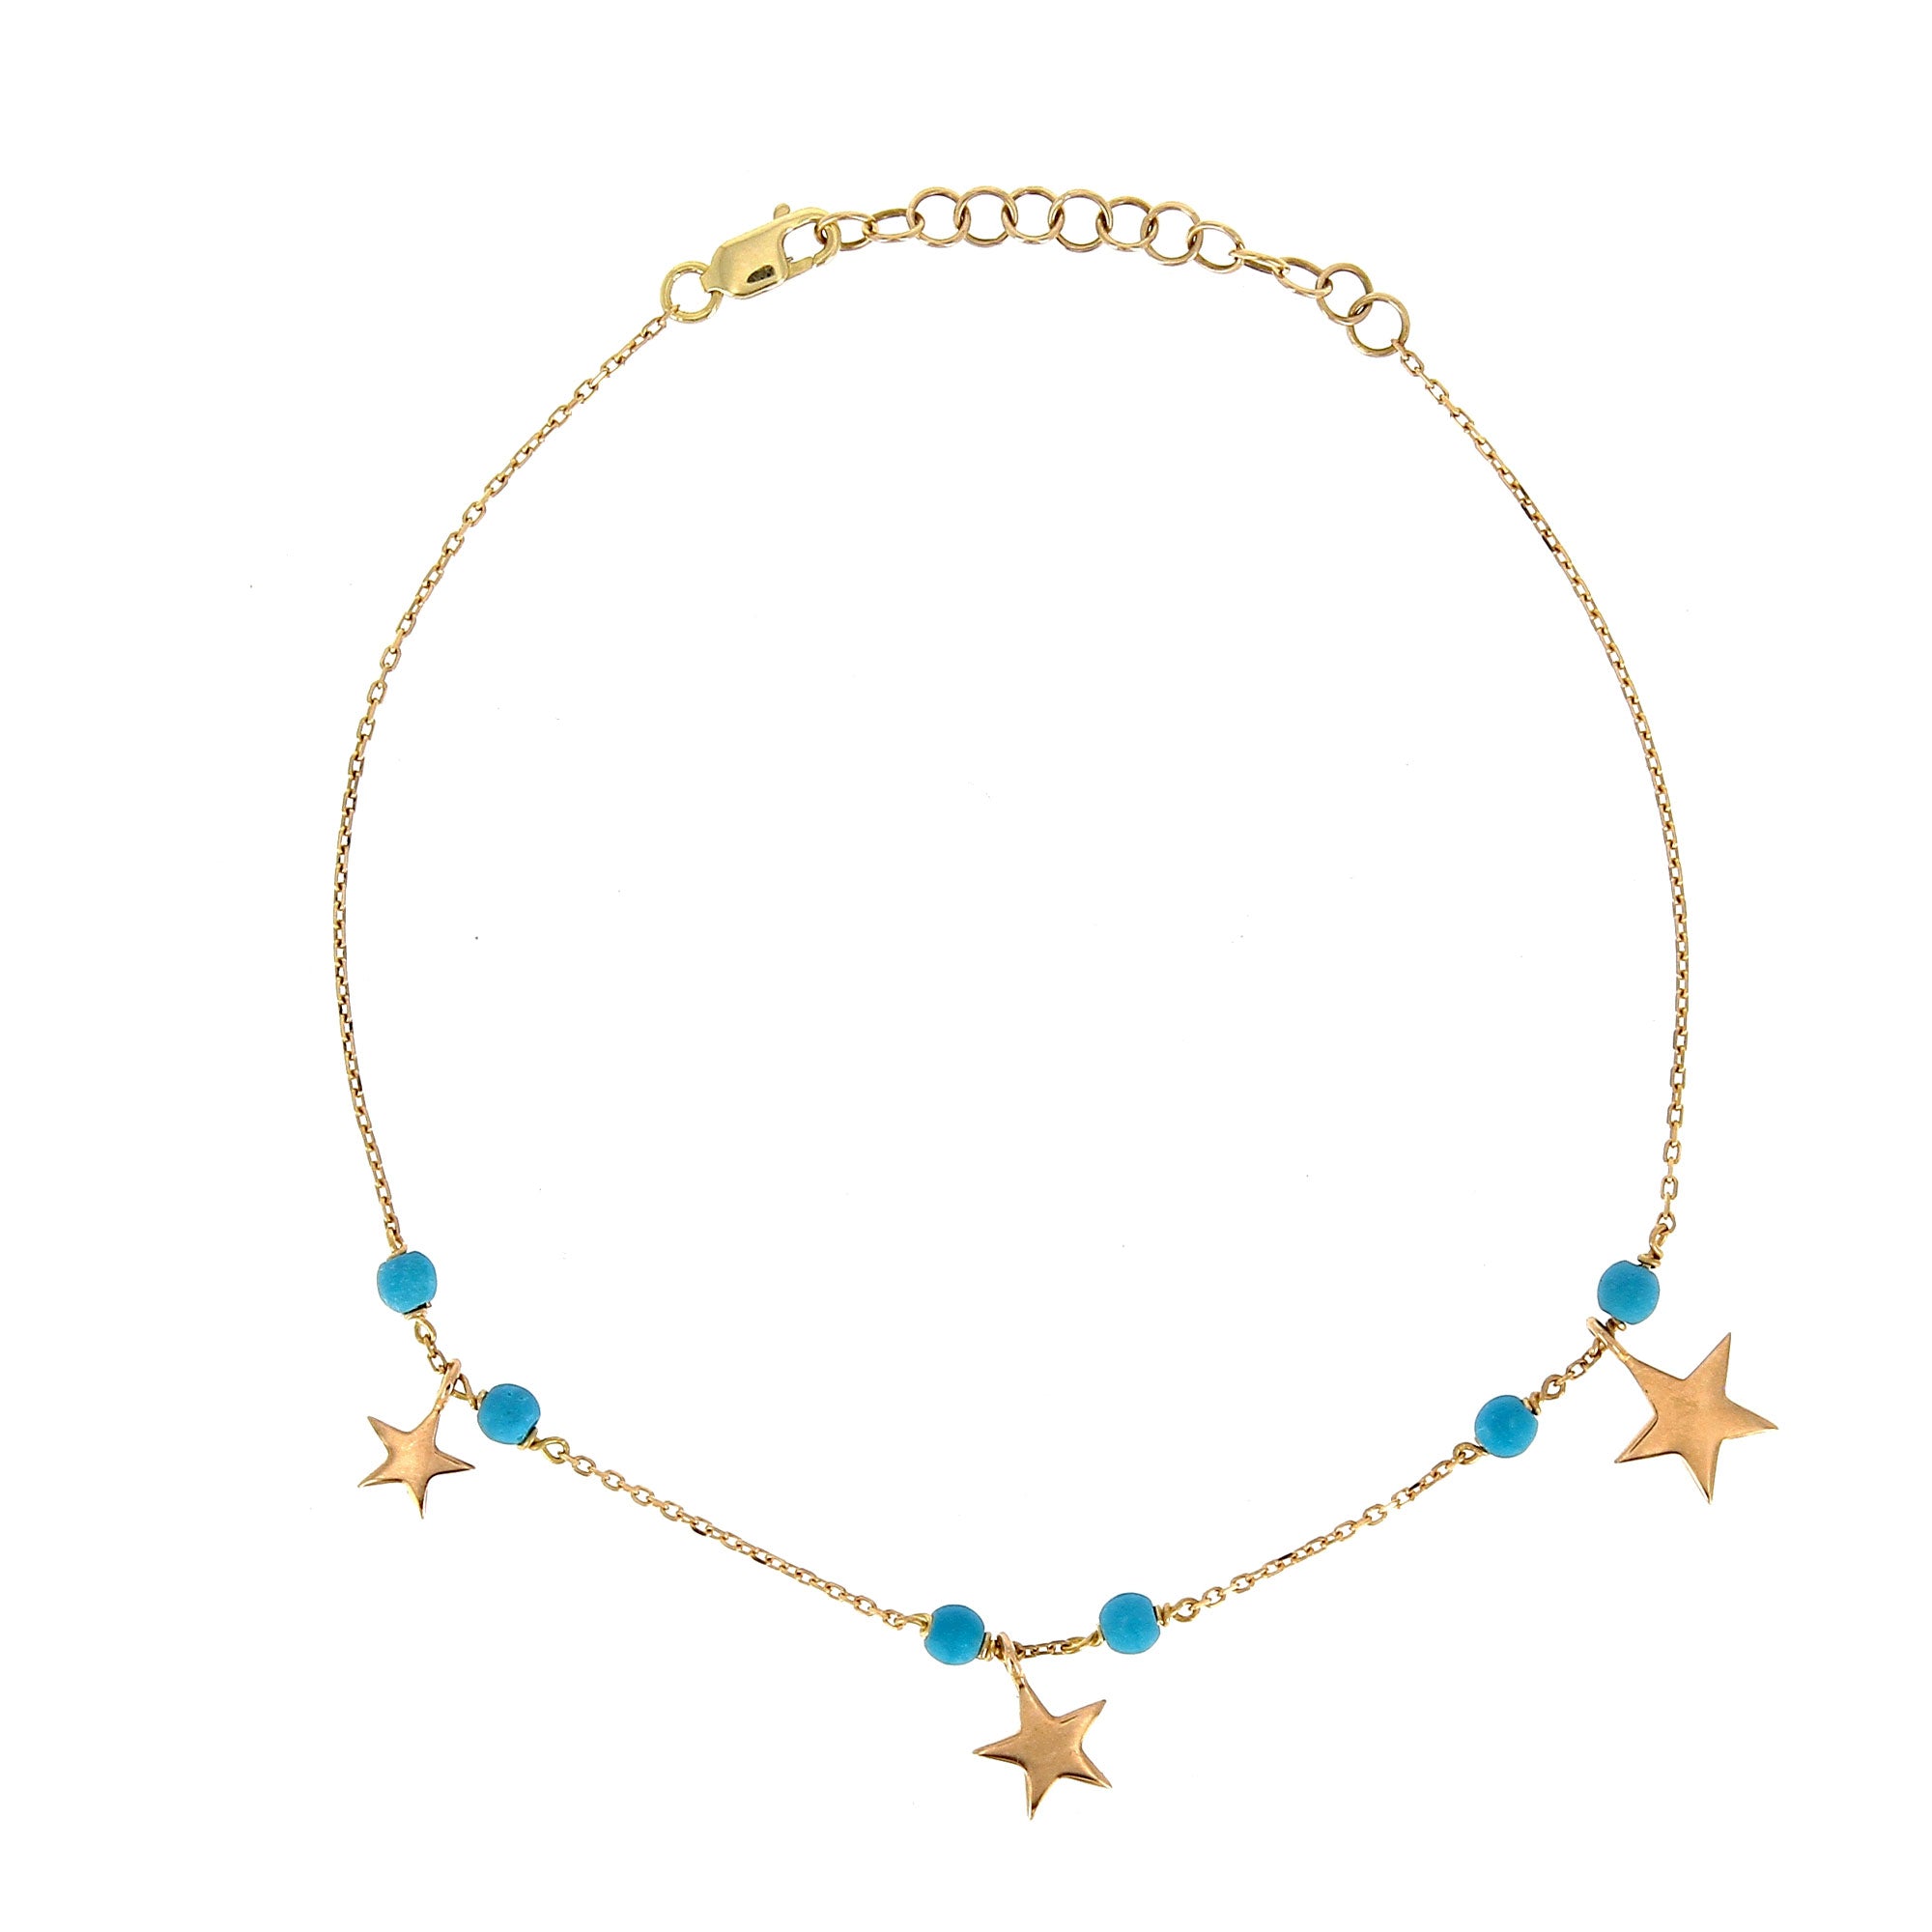 3 Stars Turquoise Ankle Bracelet 